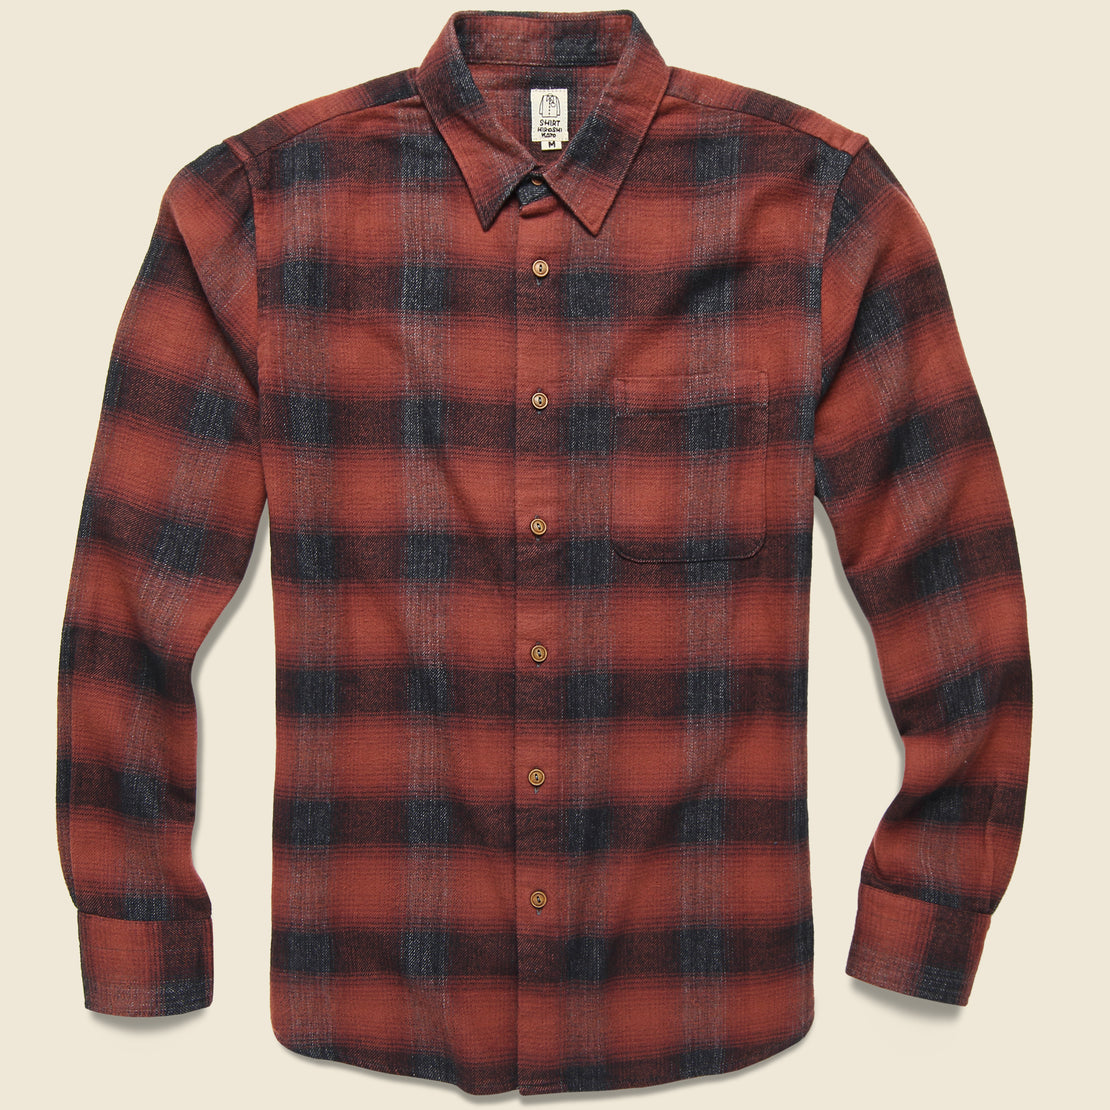 KATO Vintage Plaid Double Gauze Shirt - Red Check